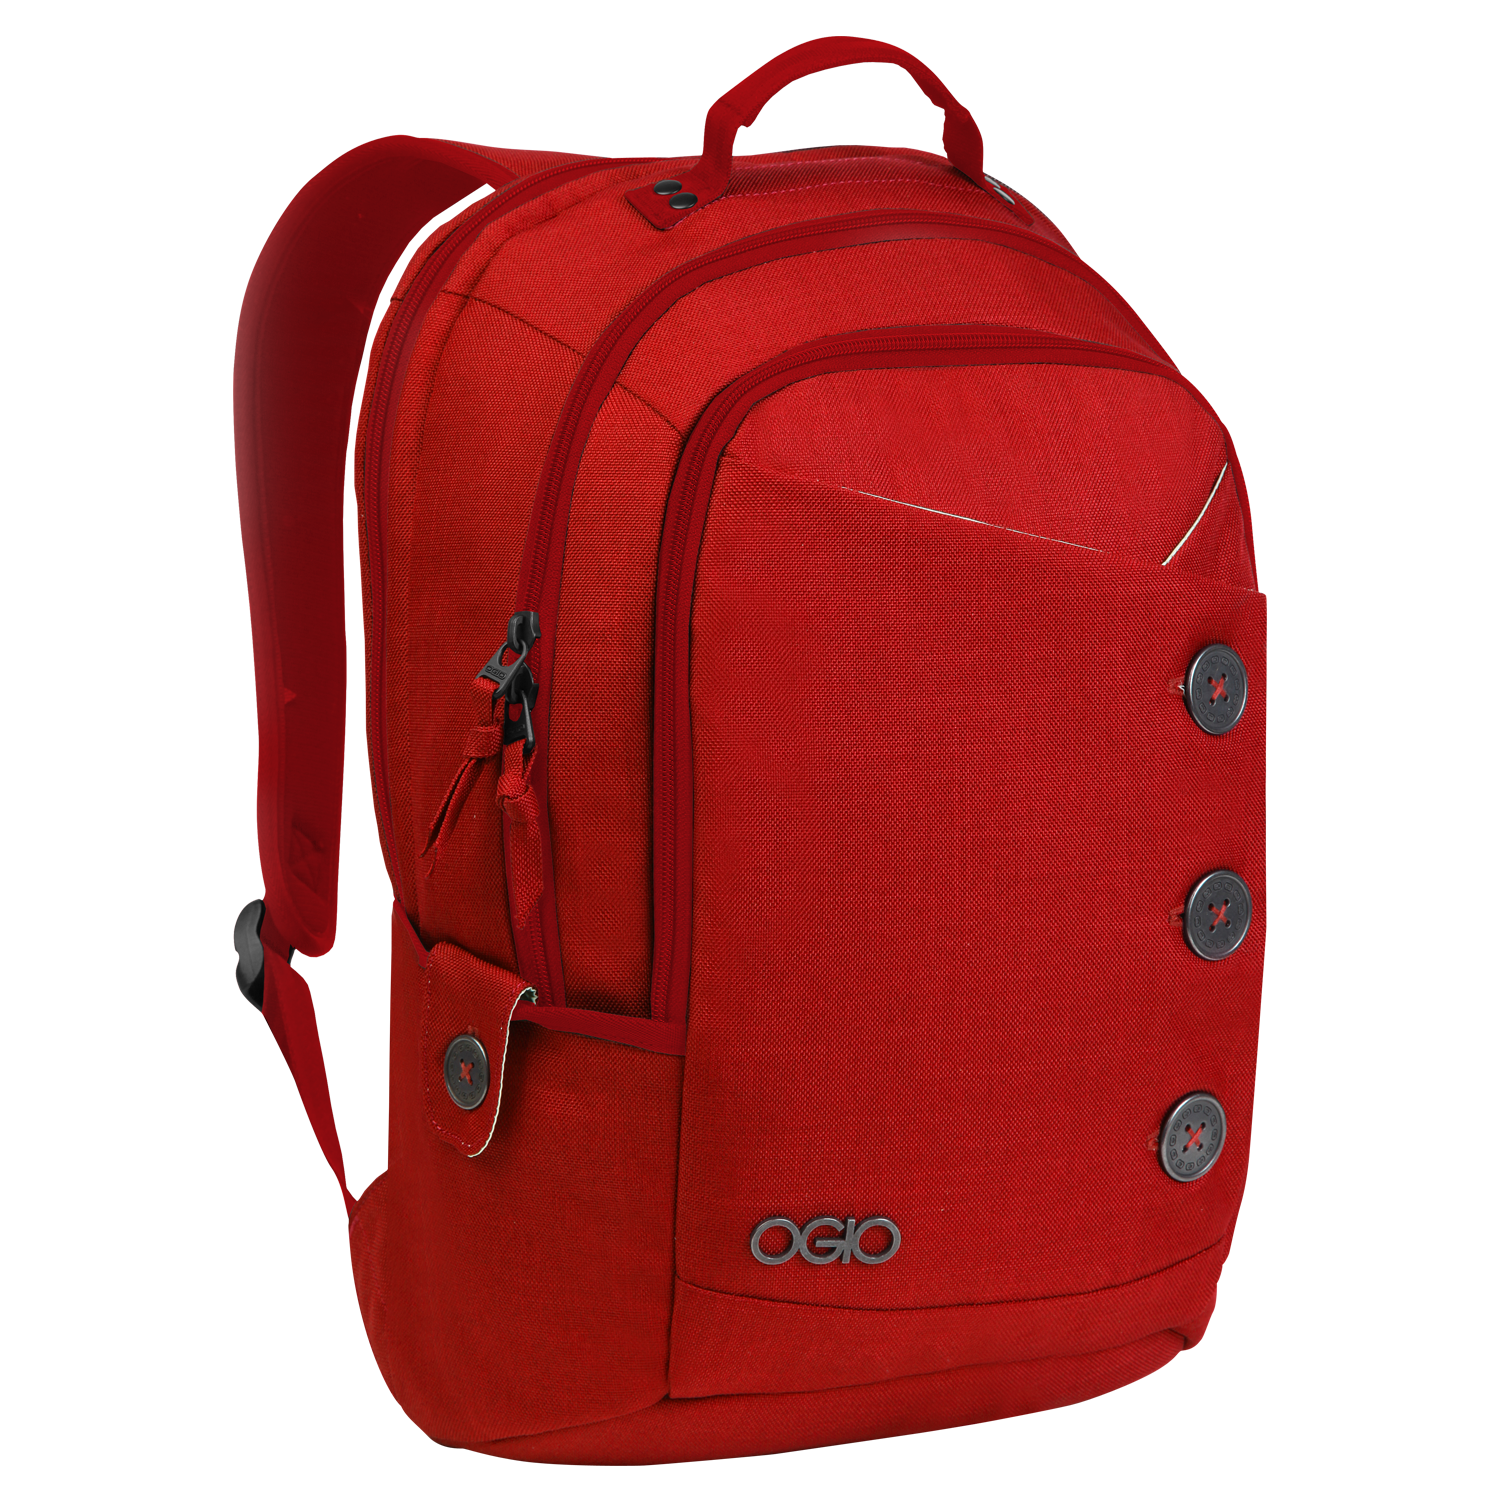 Red Backpack PNG Transparent Image